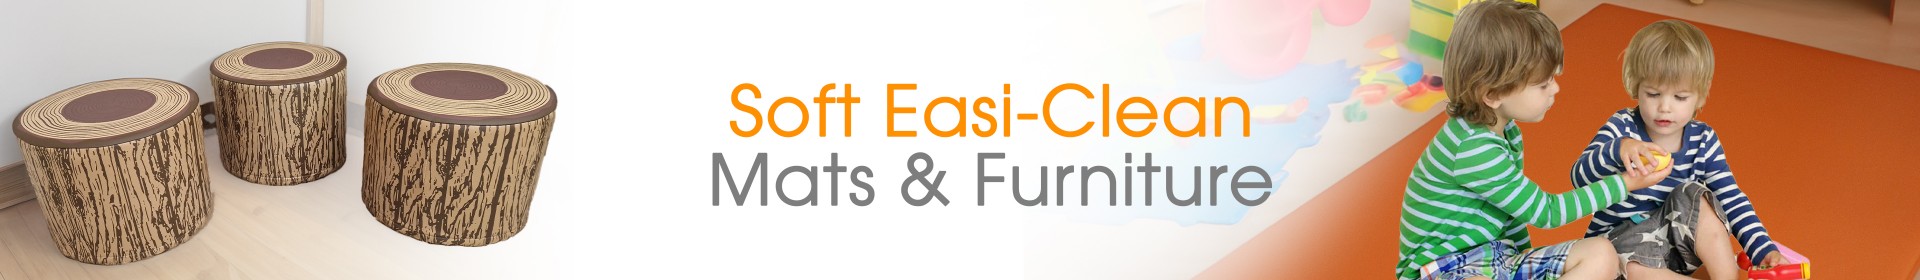 Soft Easi-Clean Mats & Furniture